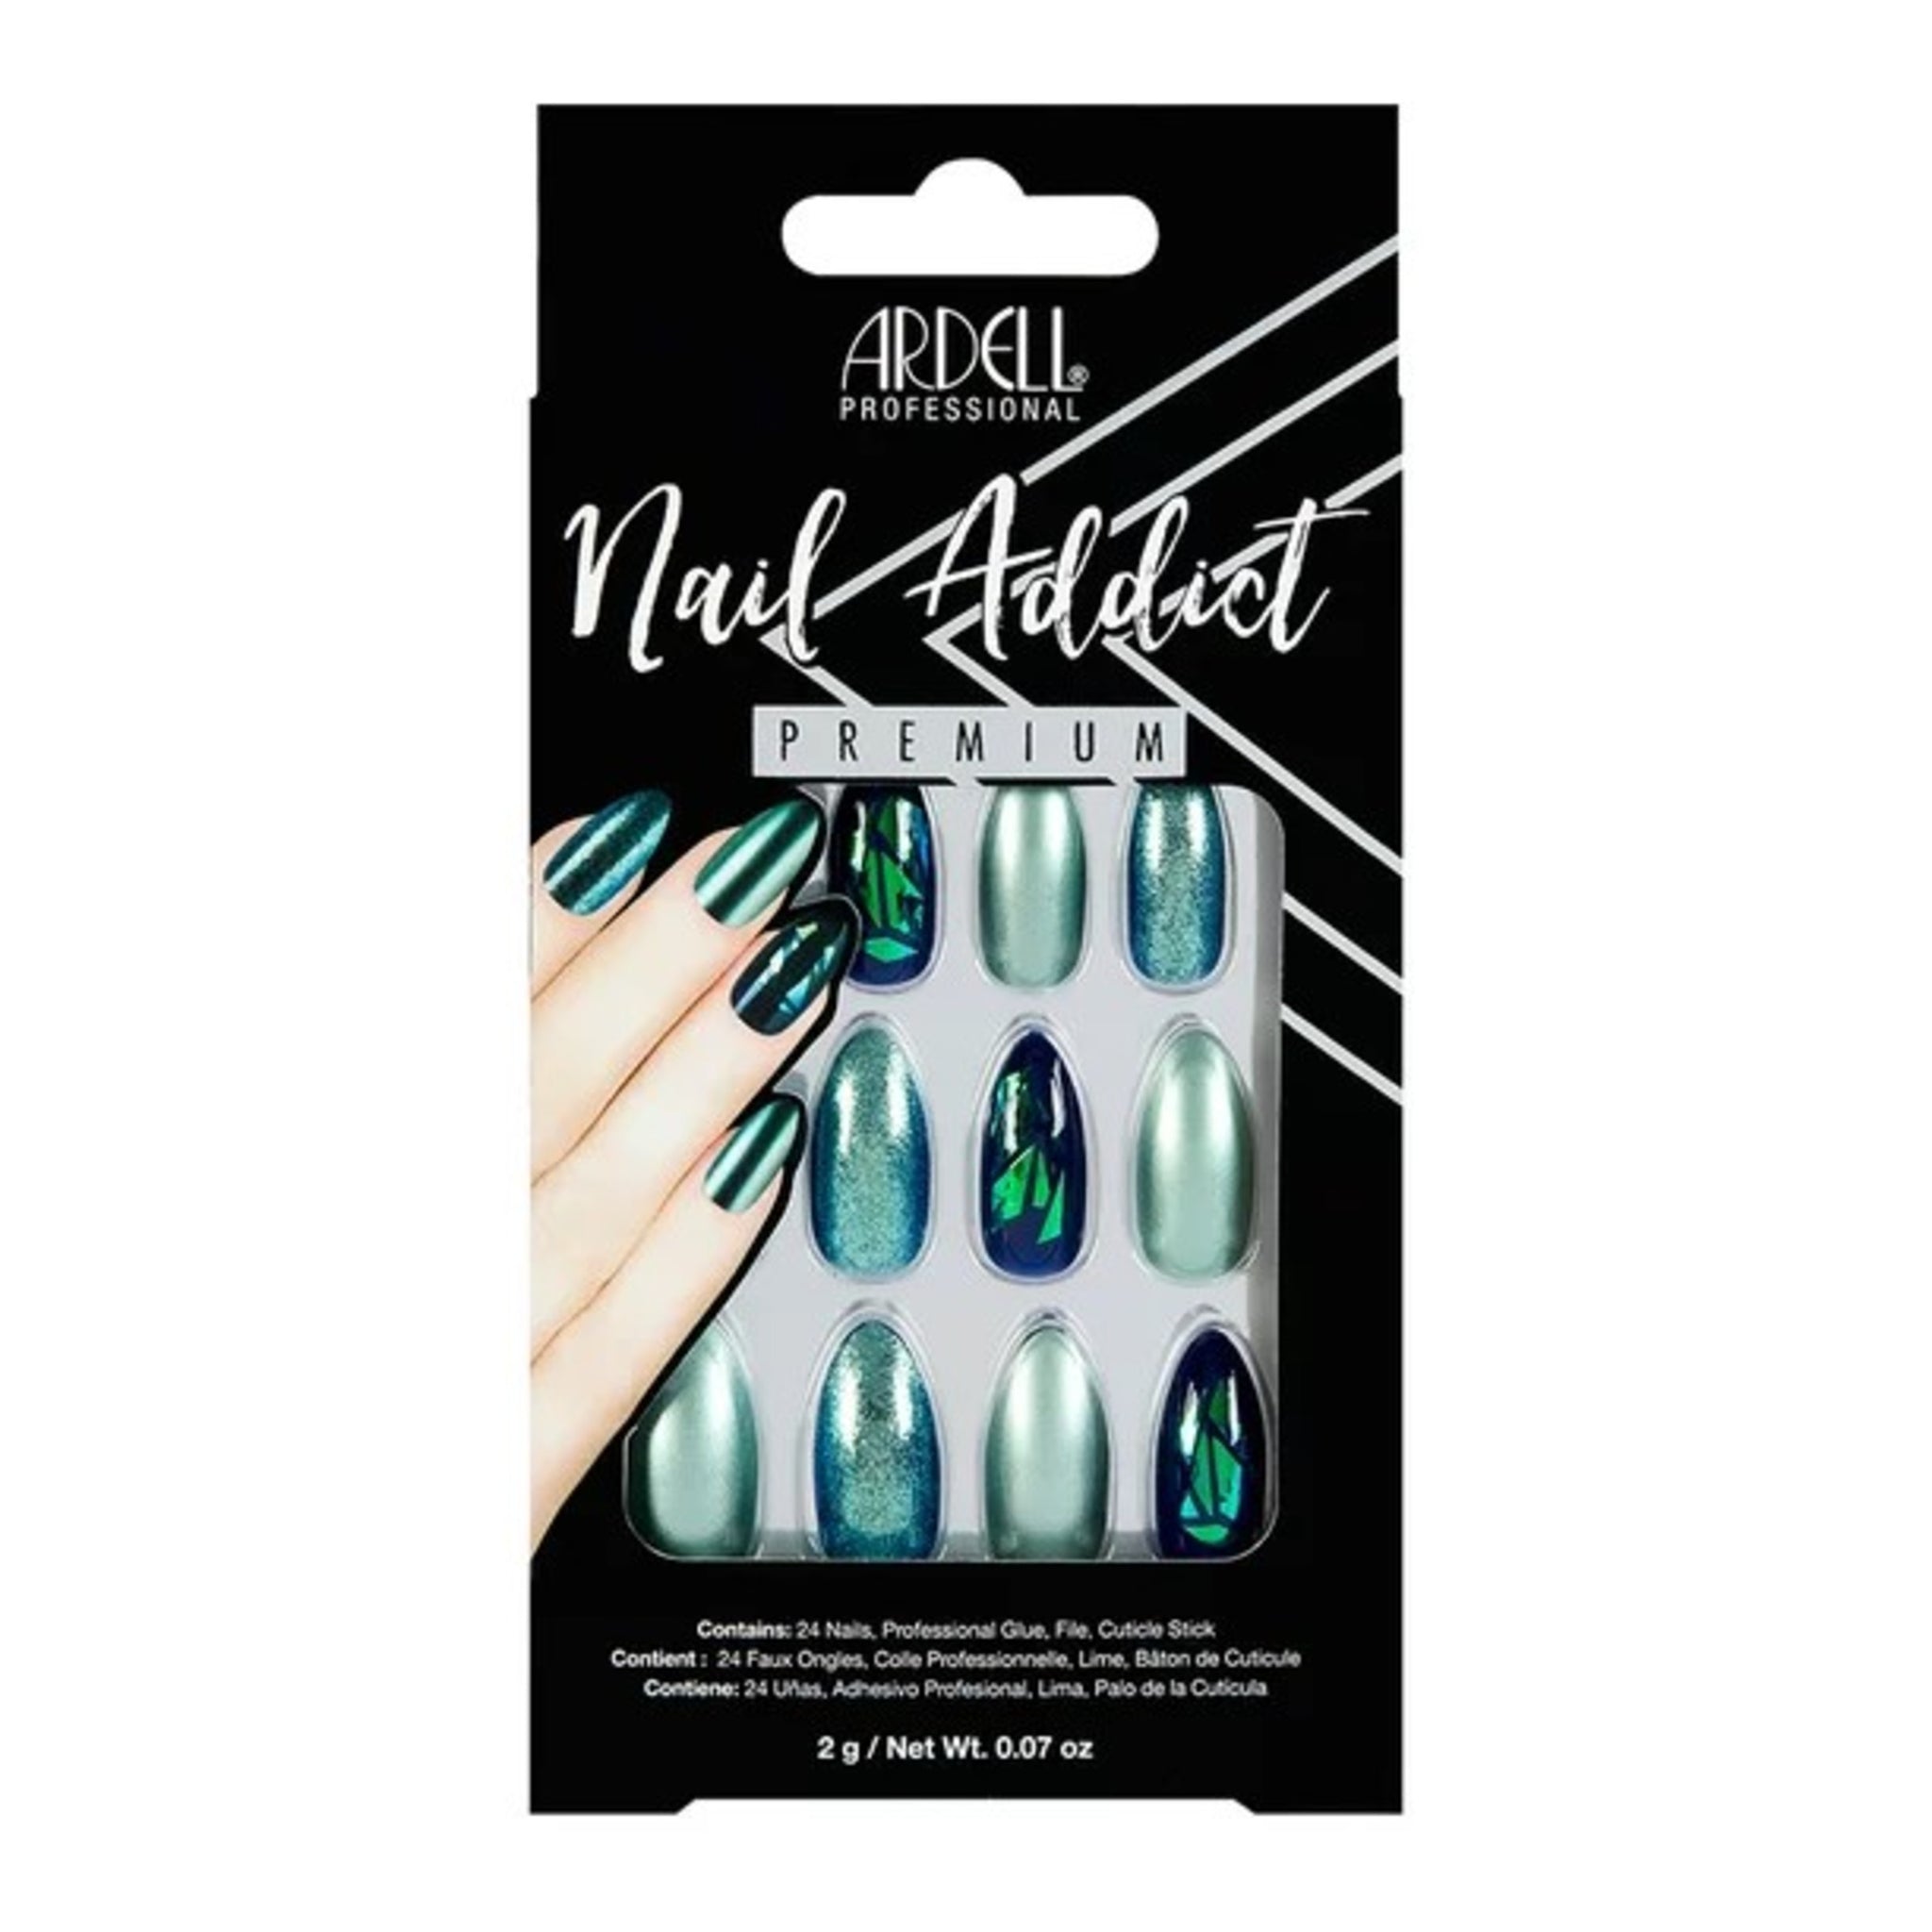 Nail Addict Premium Artificial Nails